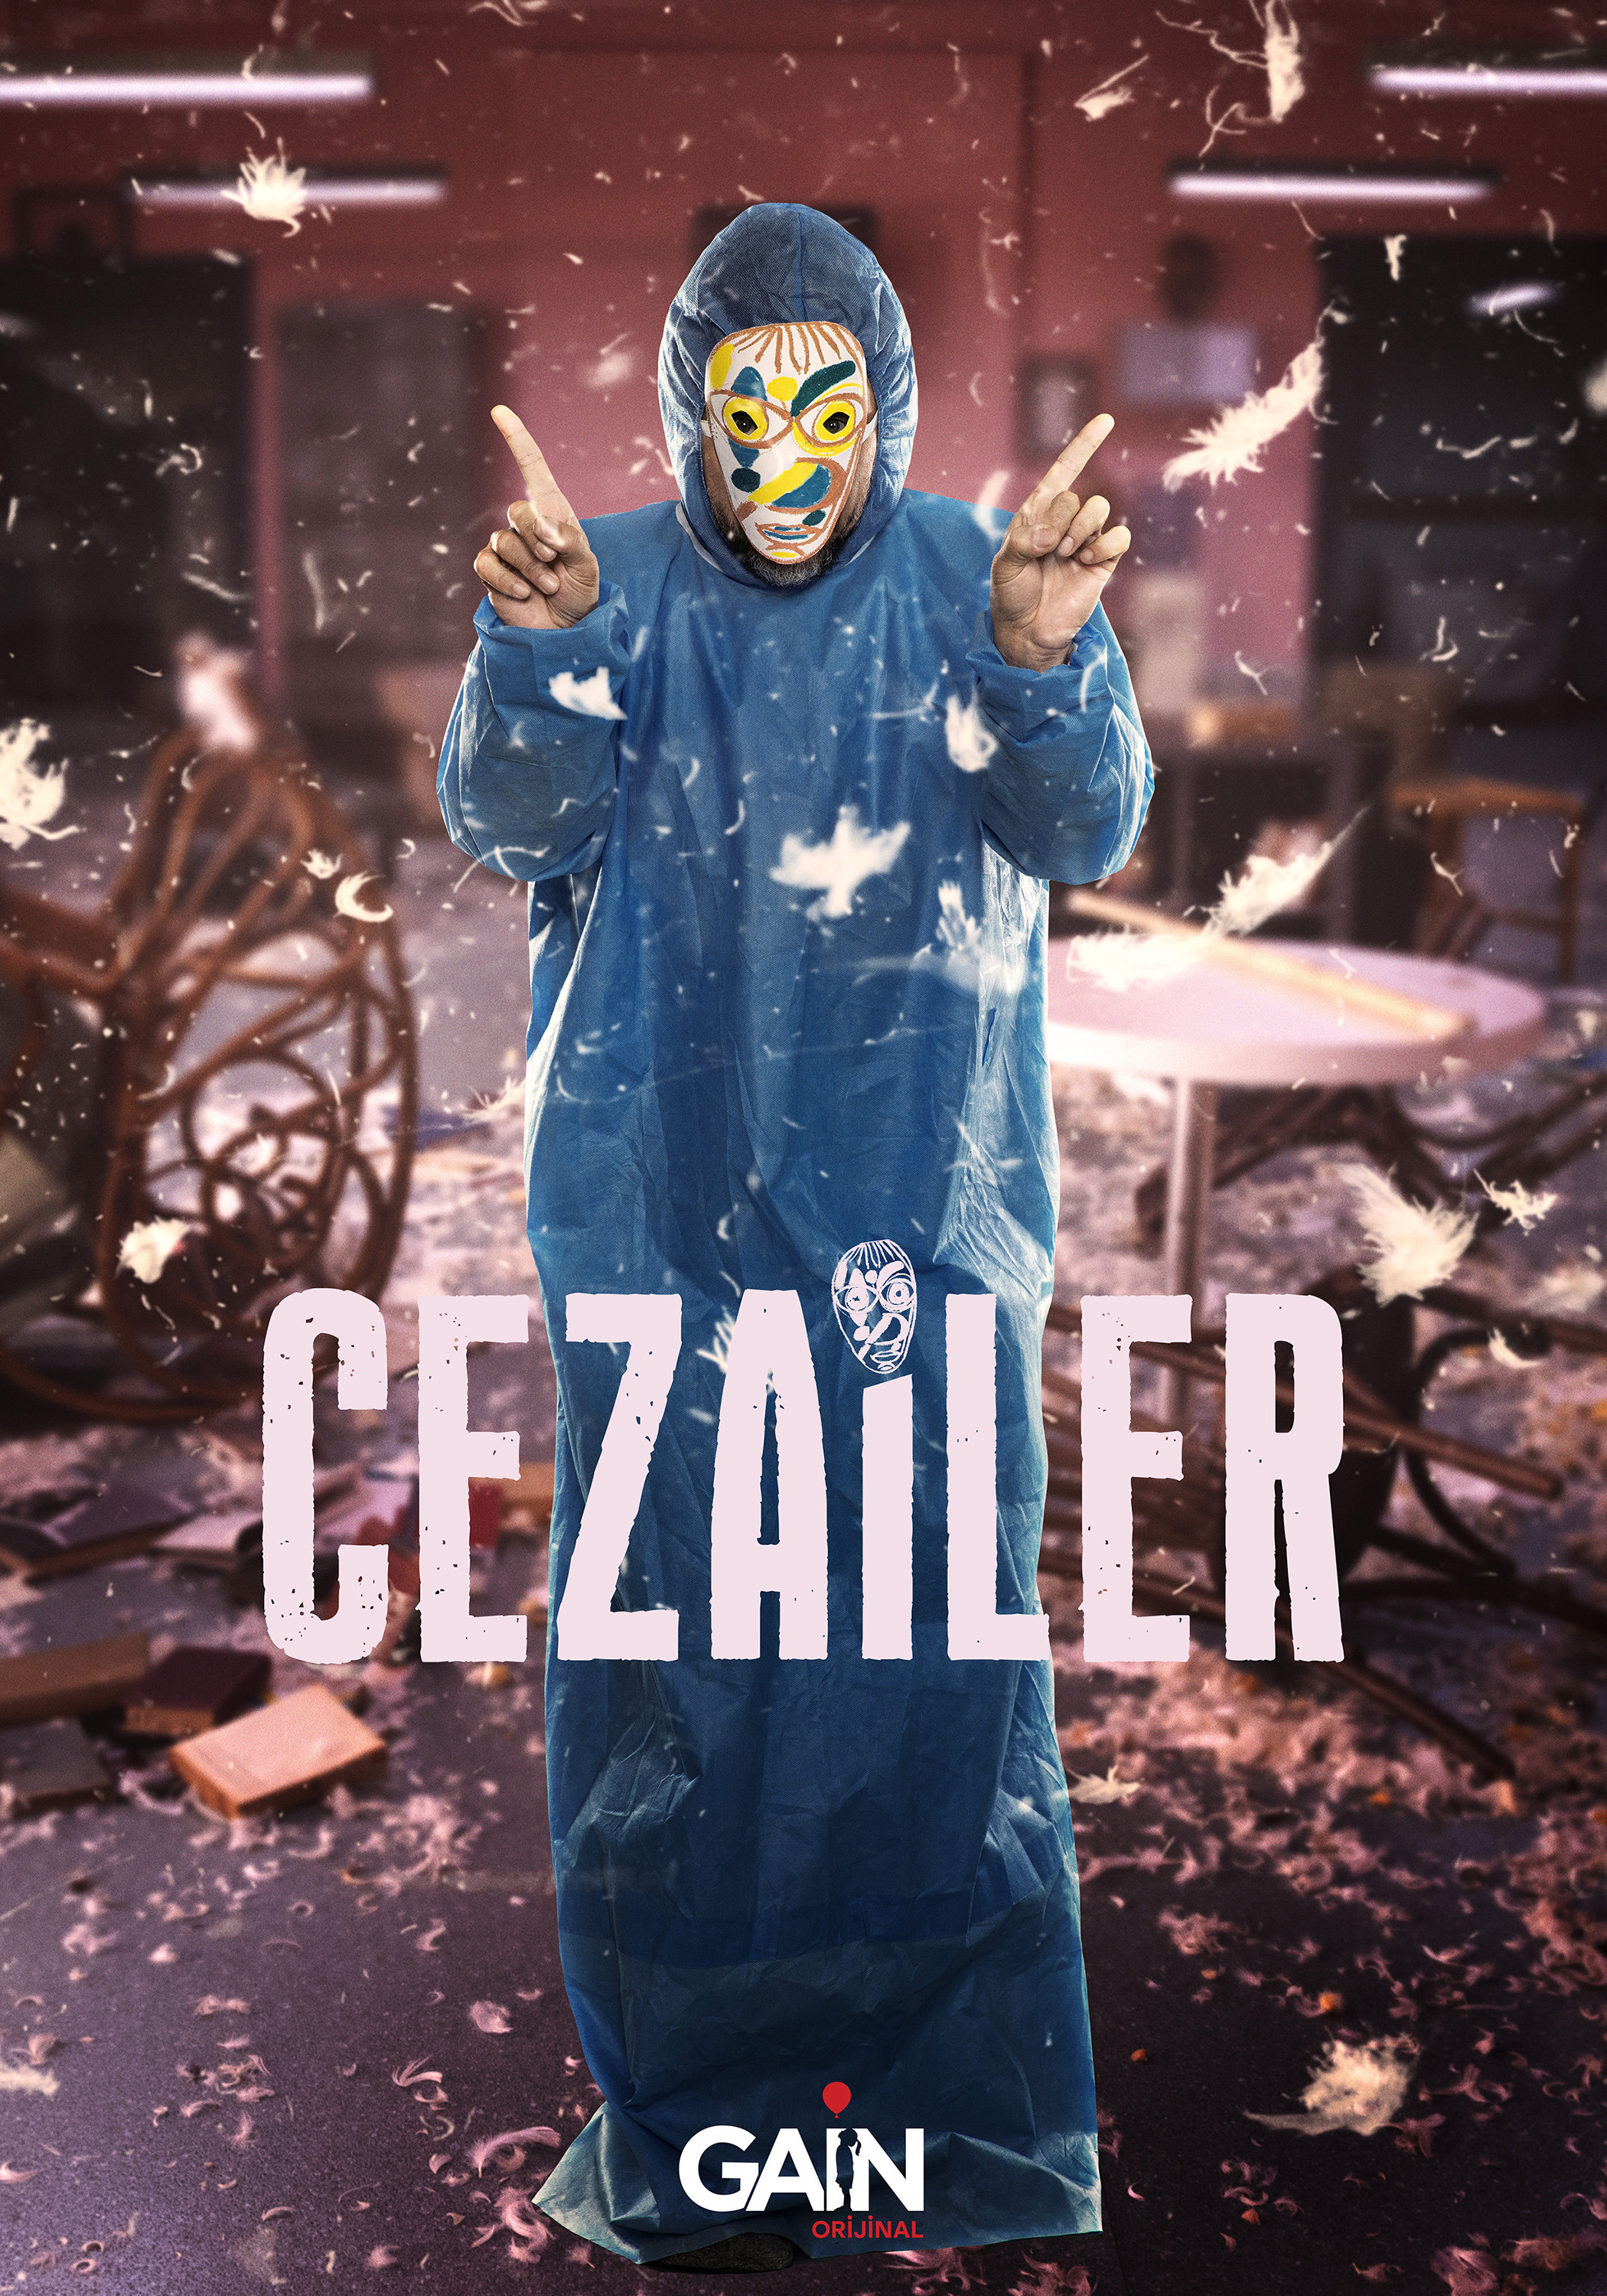 Mega Sized TV Poster Image for Cezailer (#2 of 3)